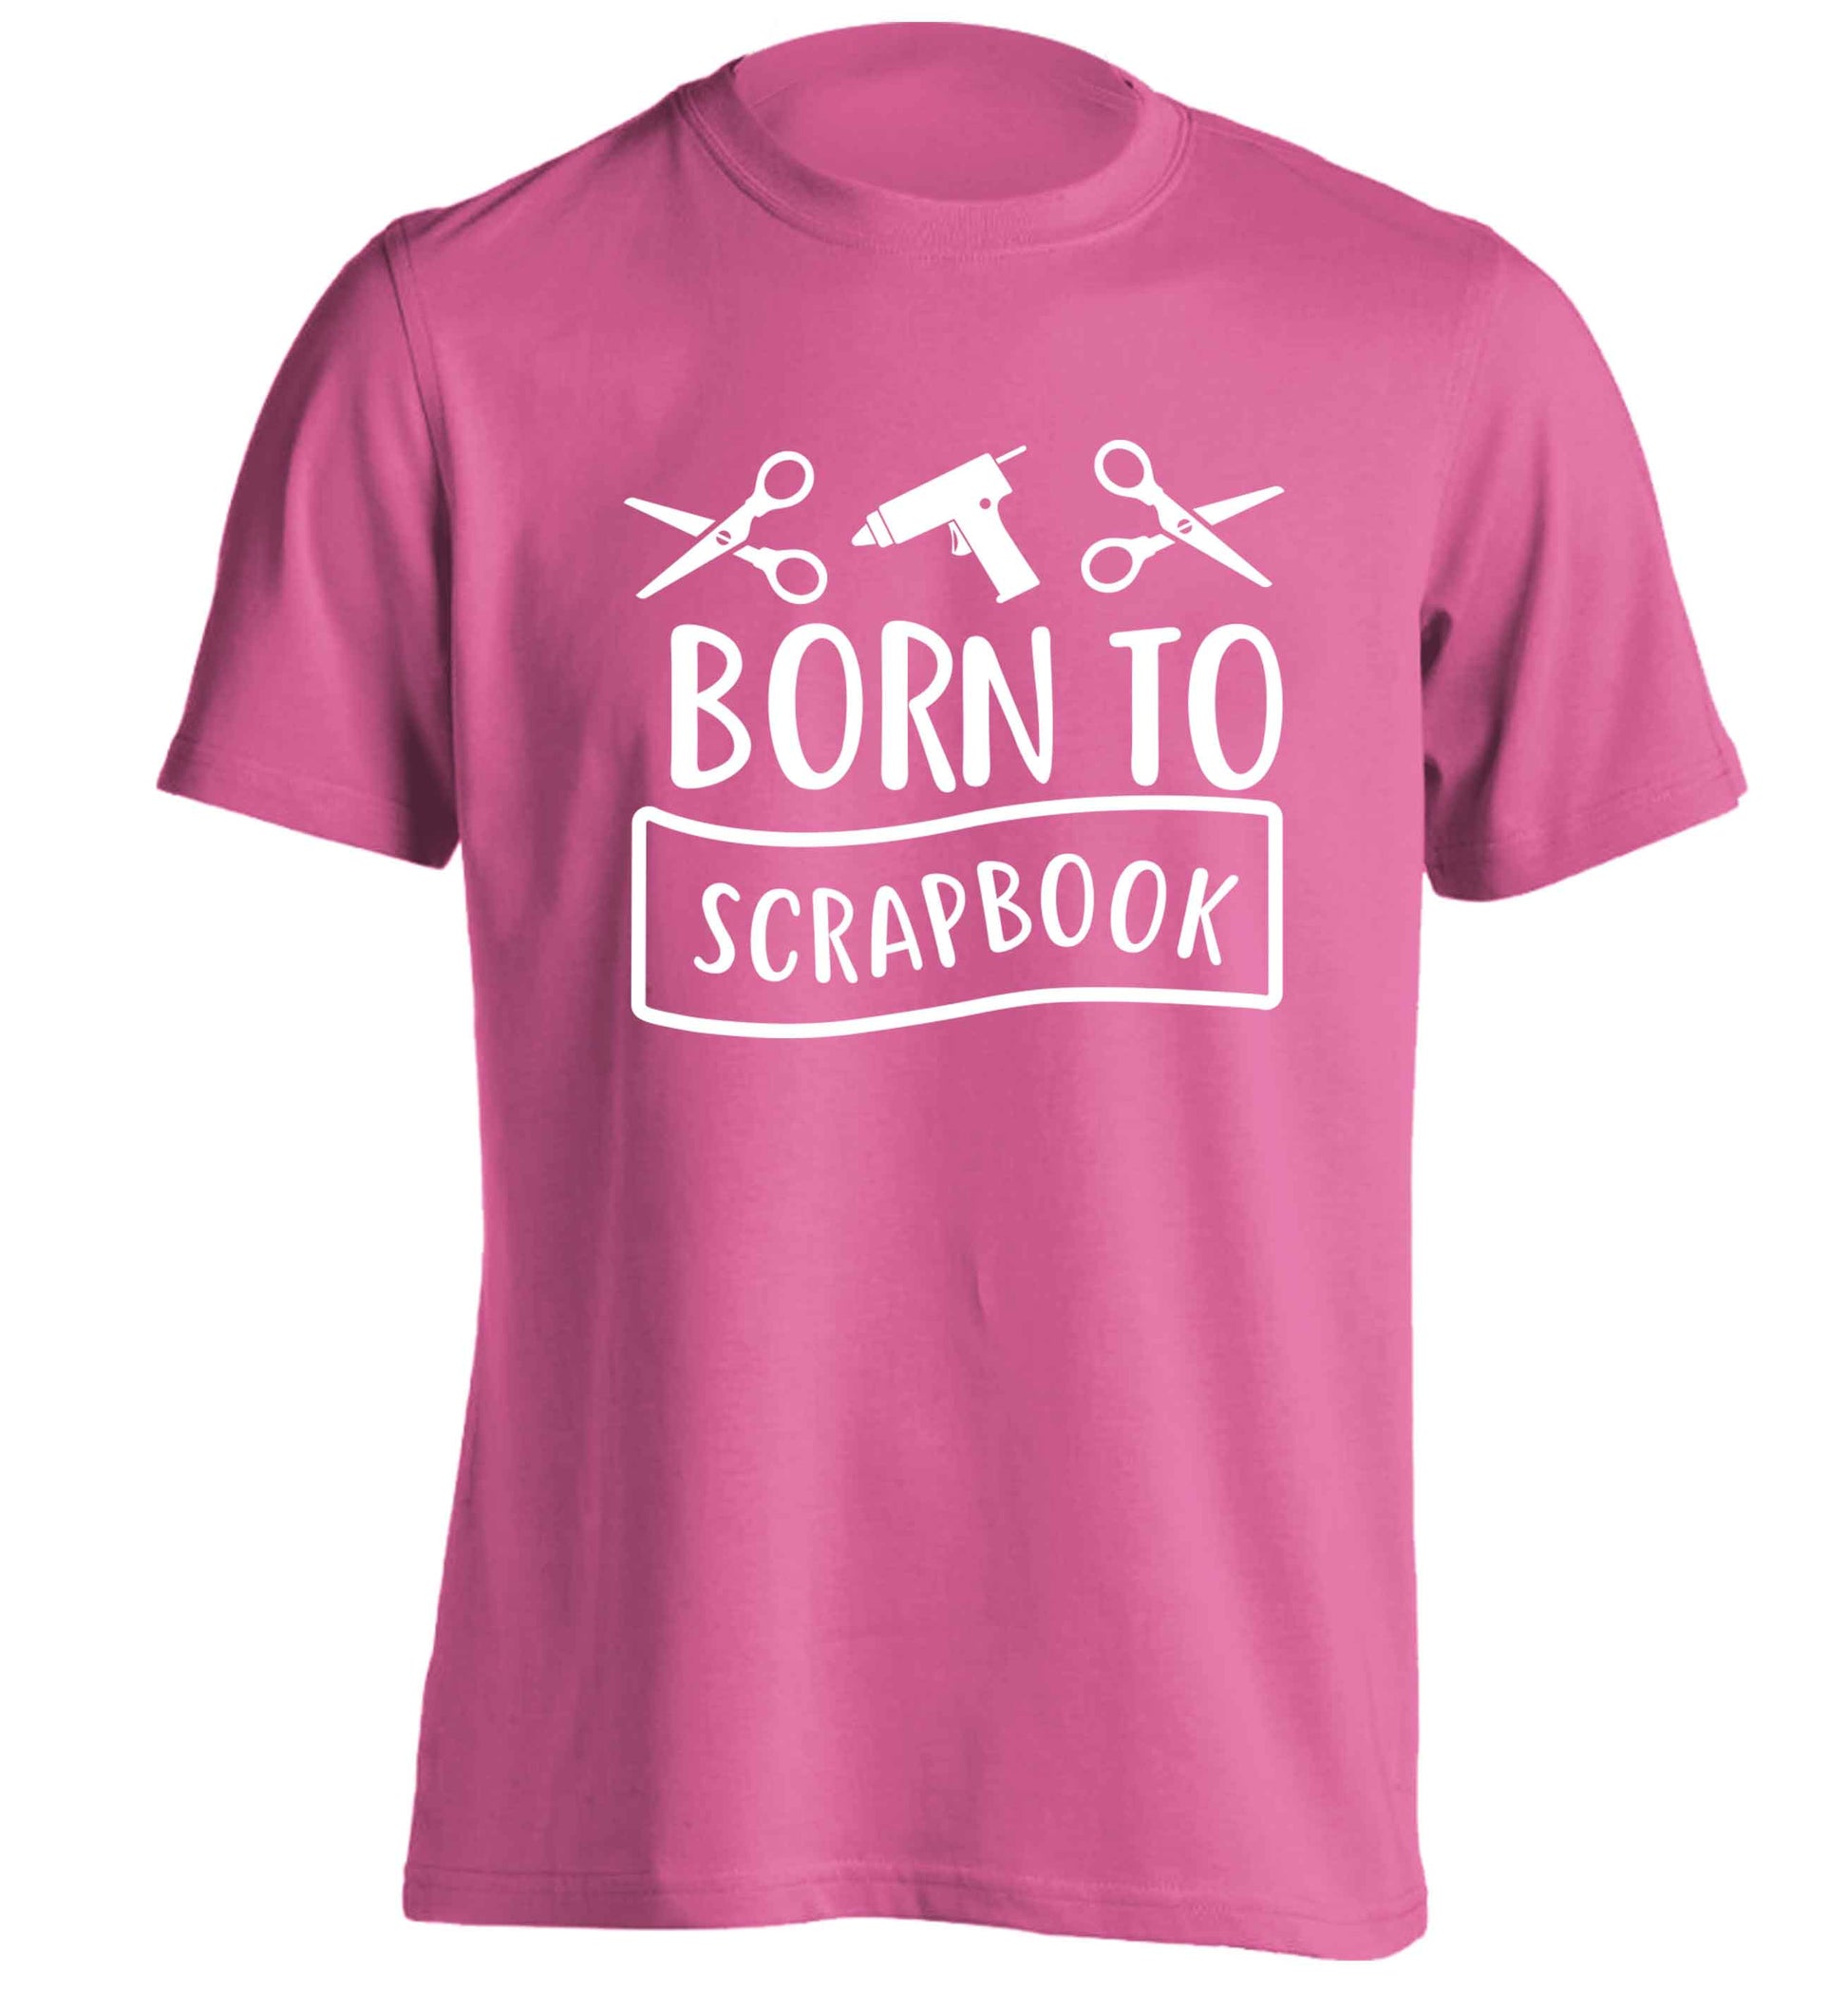 Born to scrapbook adults unisex pink Tshirt 2XL